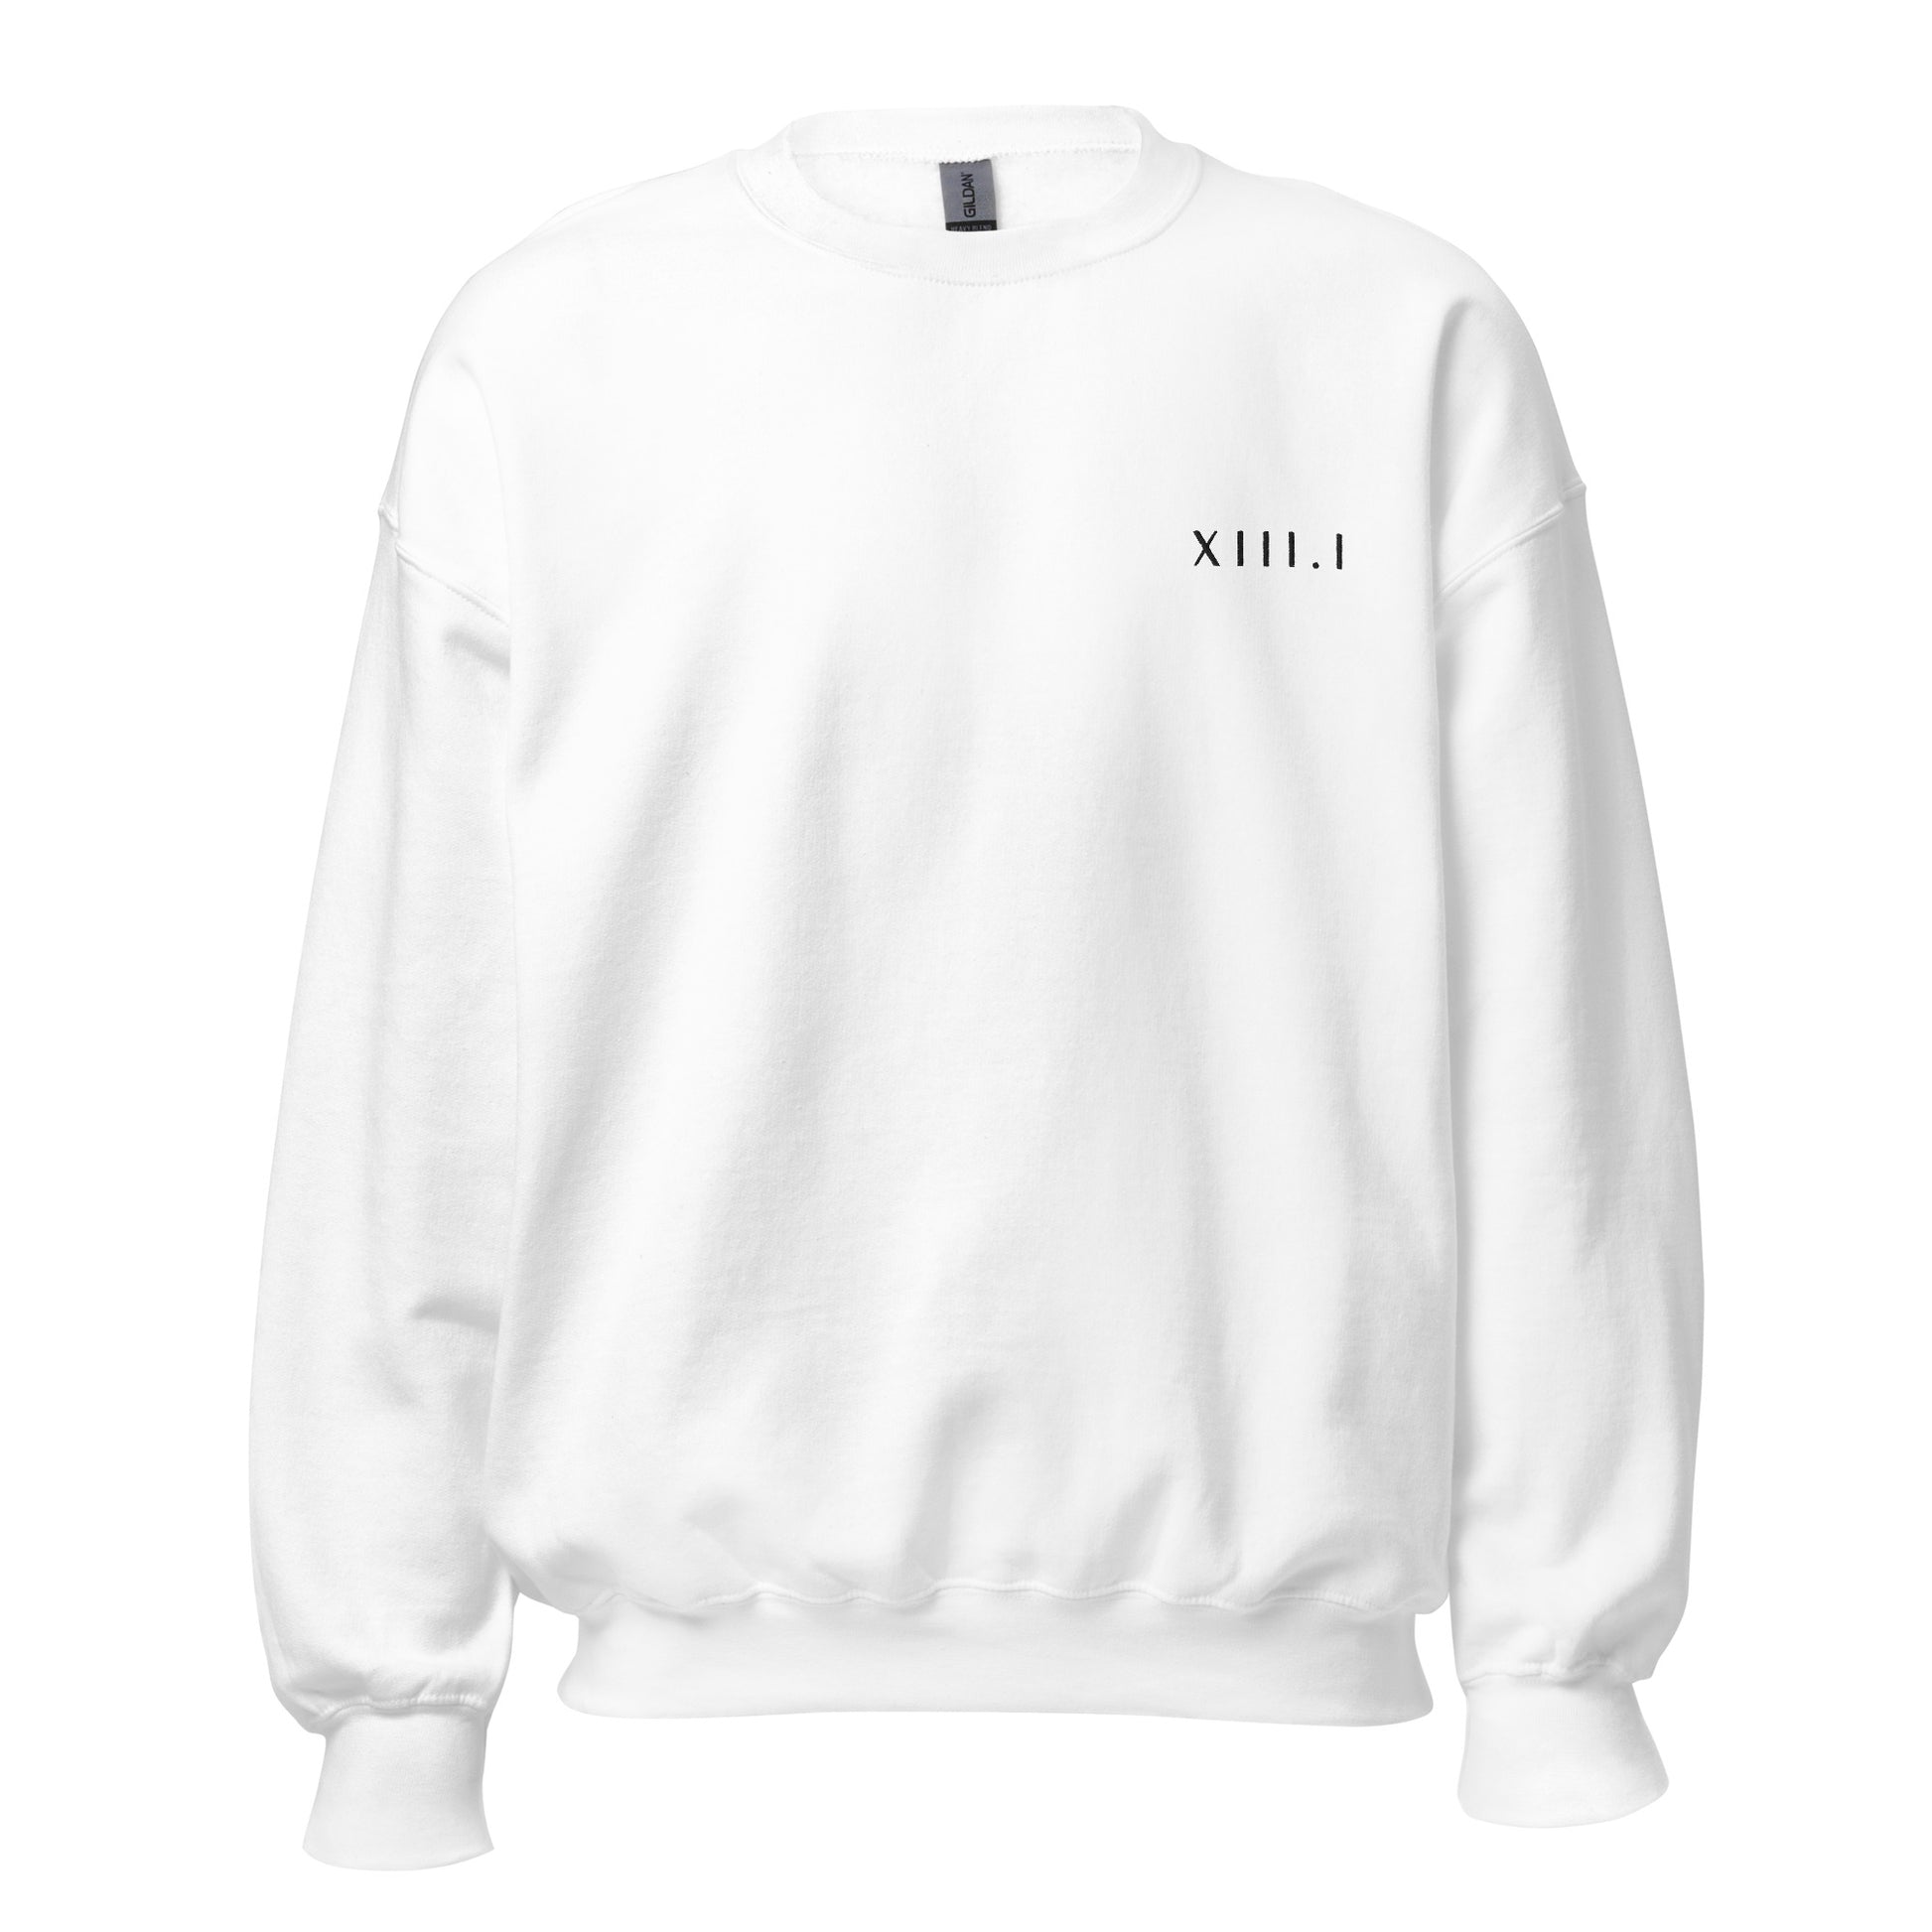 white unisex sweatshirt with XIII.I 13.1 half marathon in roman numerals embroidered in black writing